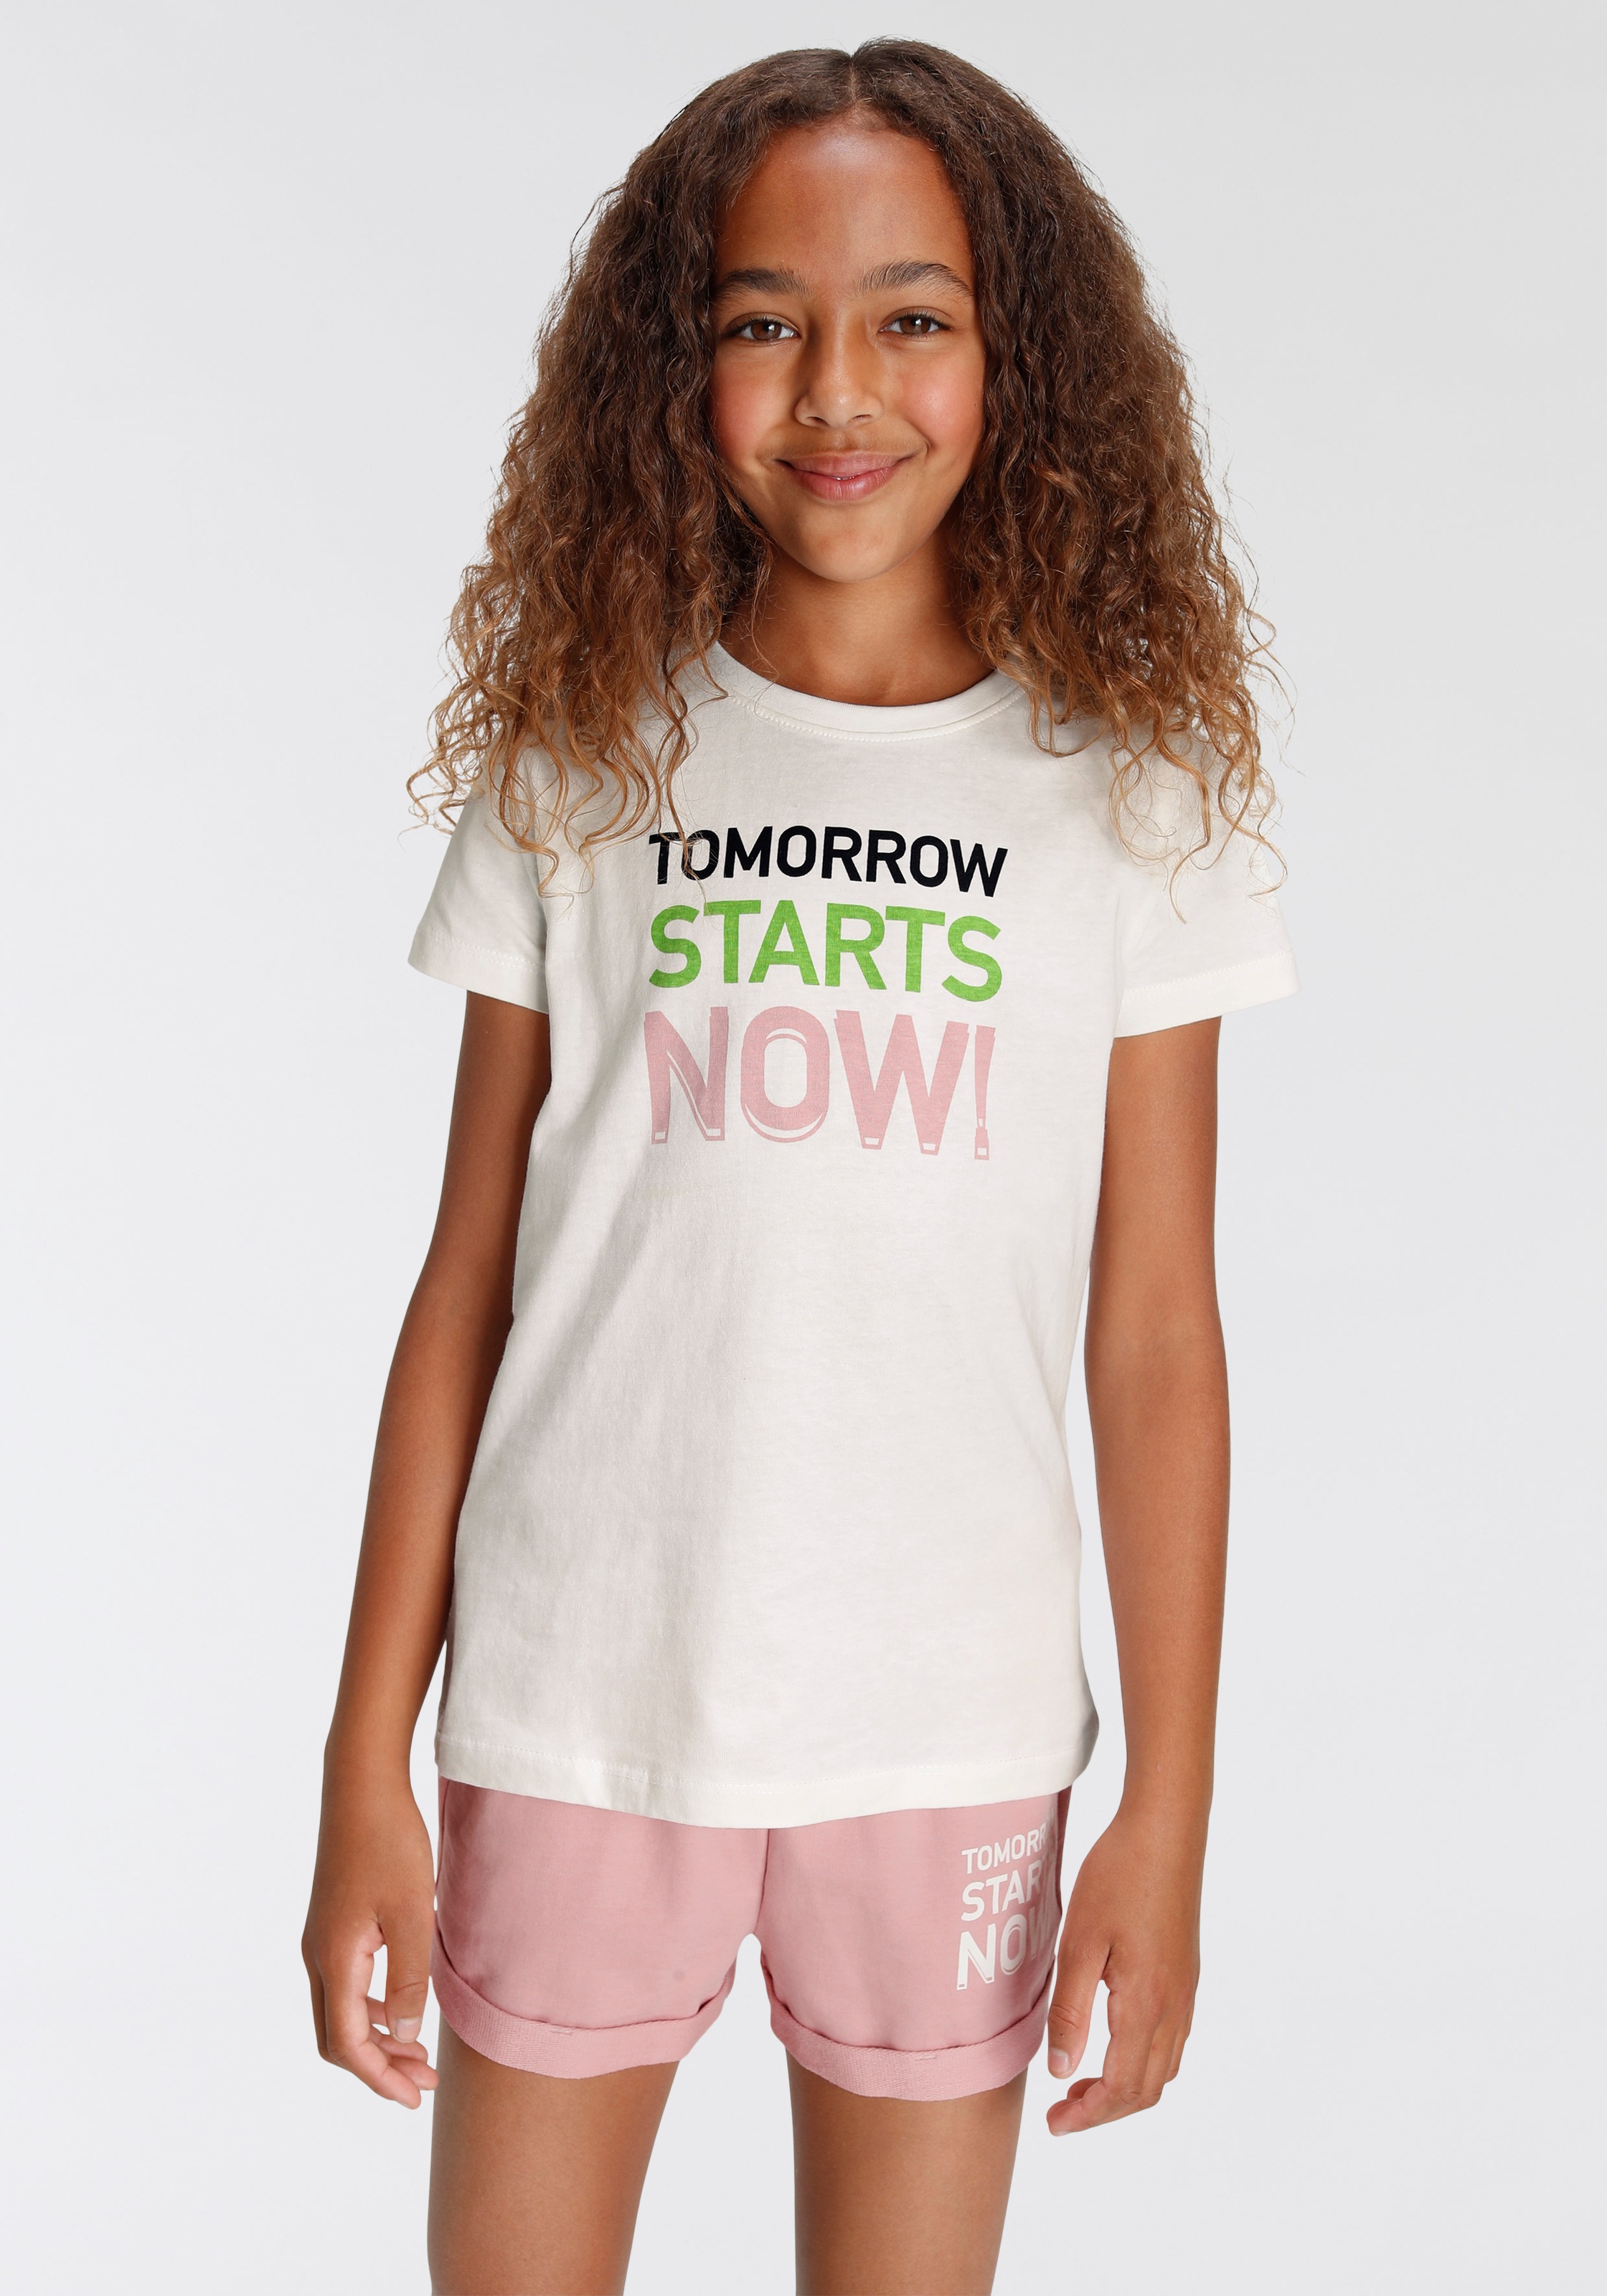 KIDSWORLD T-Shirt »Tomorrow starts now!«, Druck jetzt im %Sale